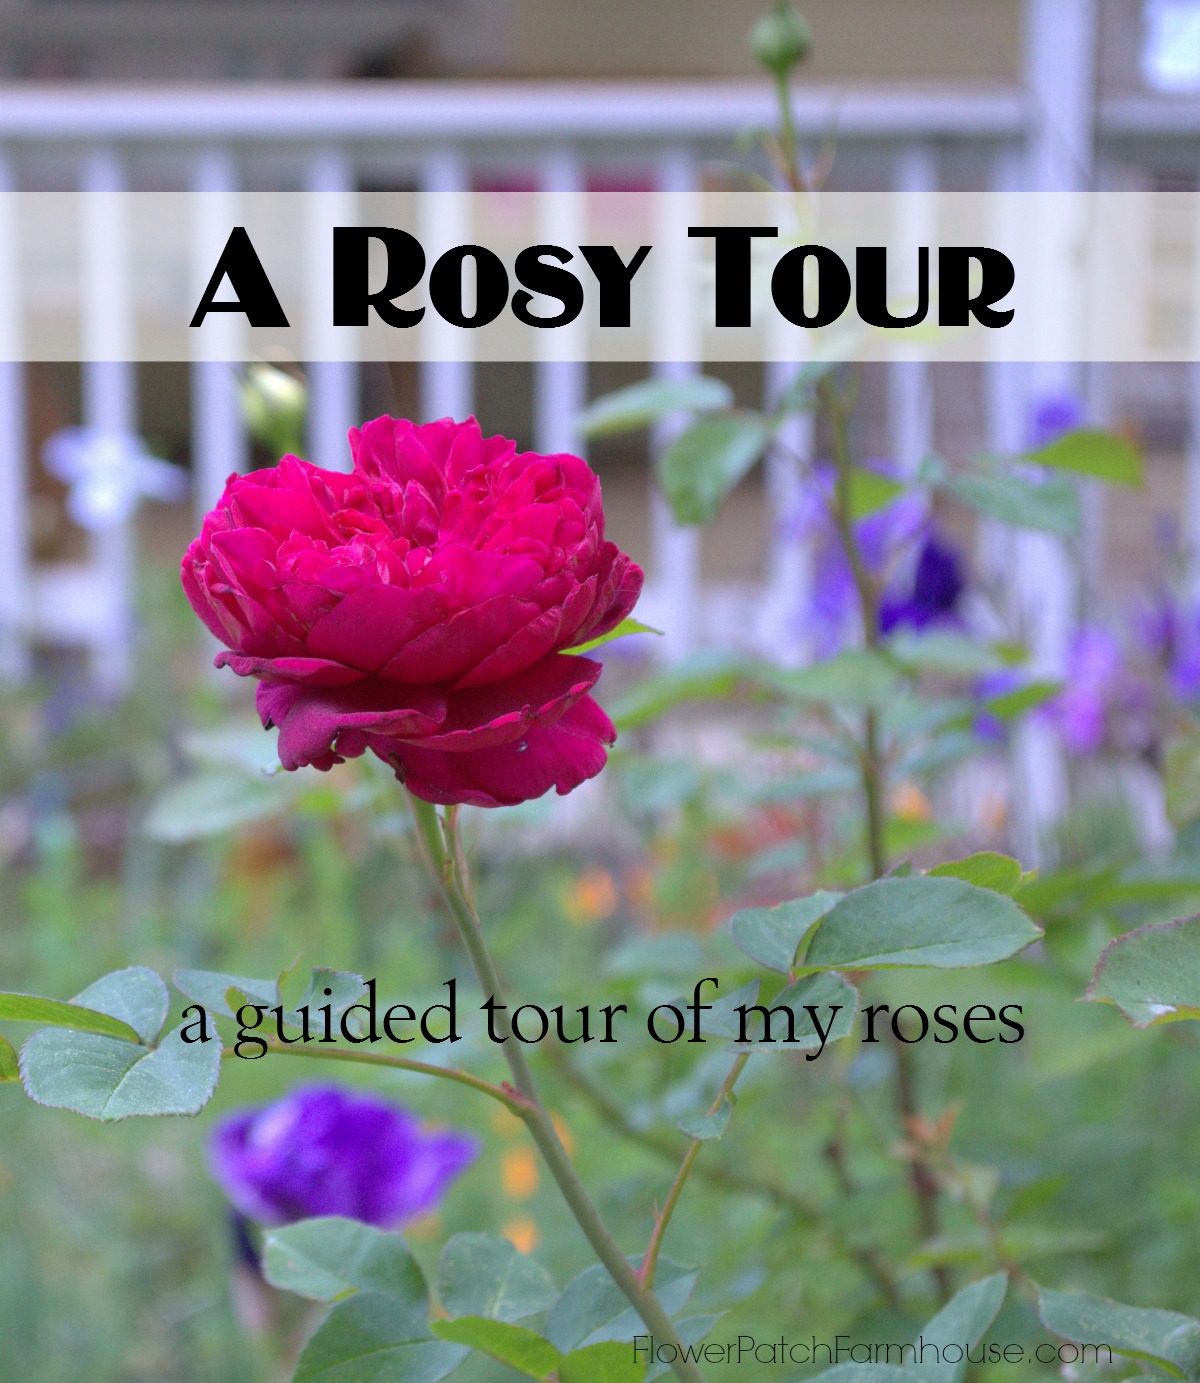 A Walk Through the Roses, June 7